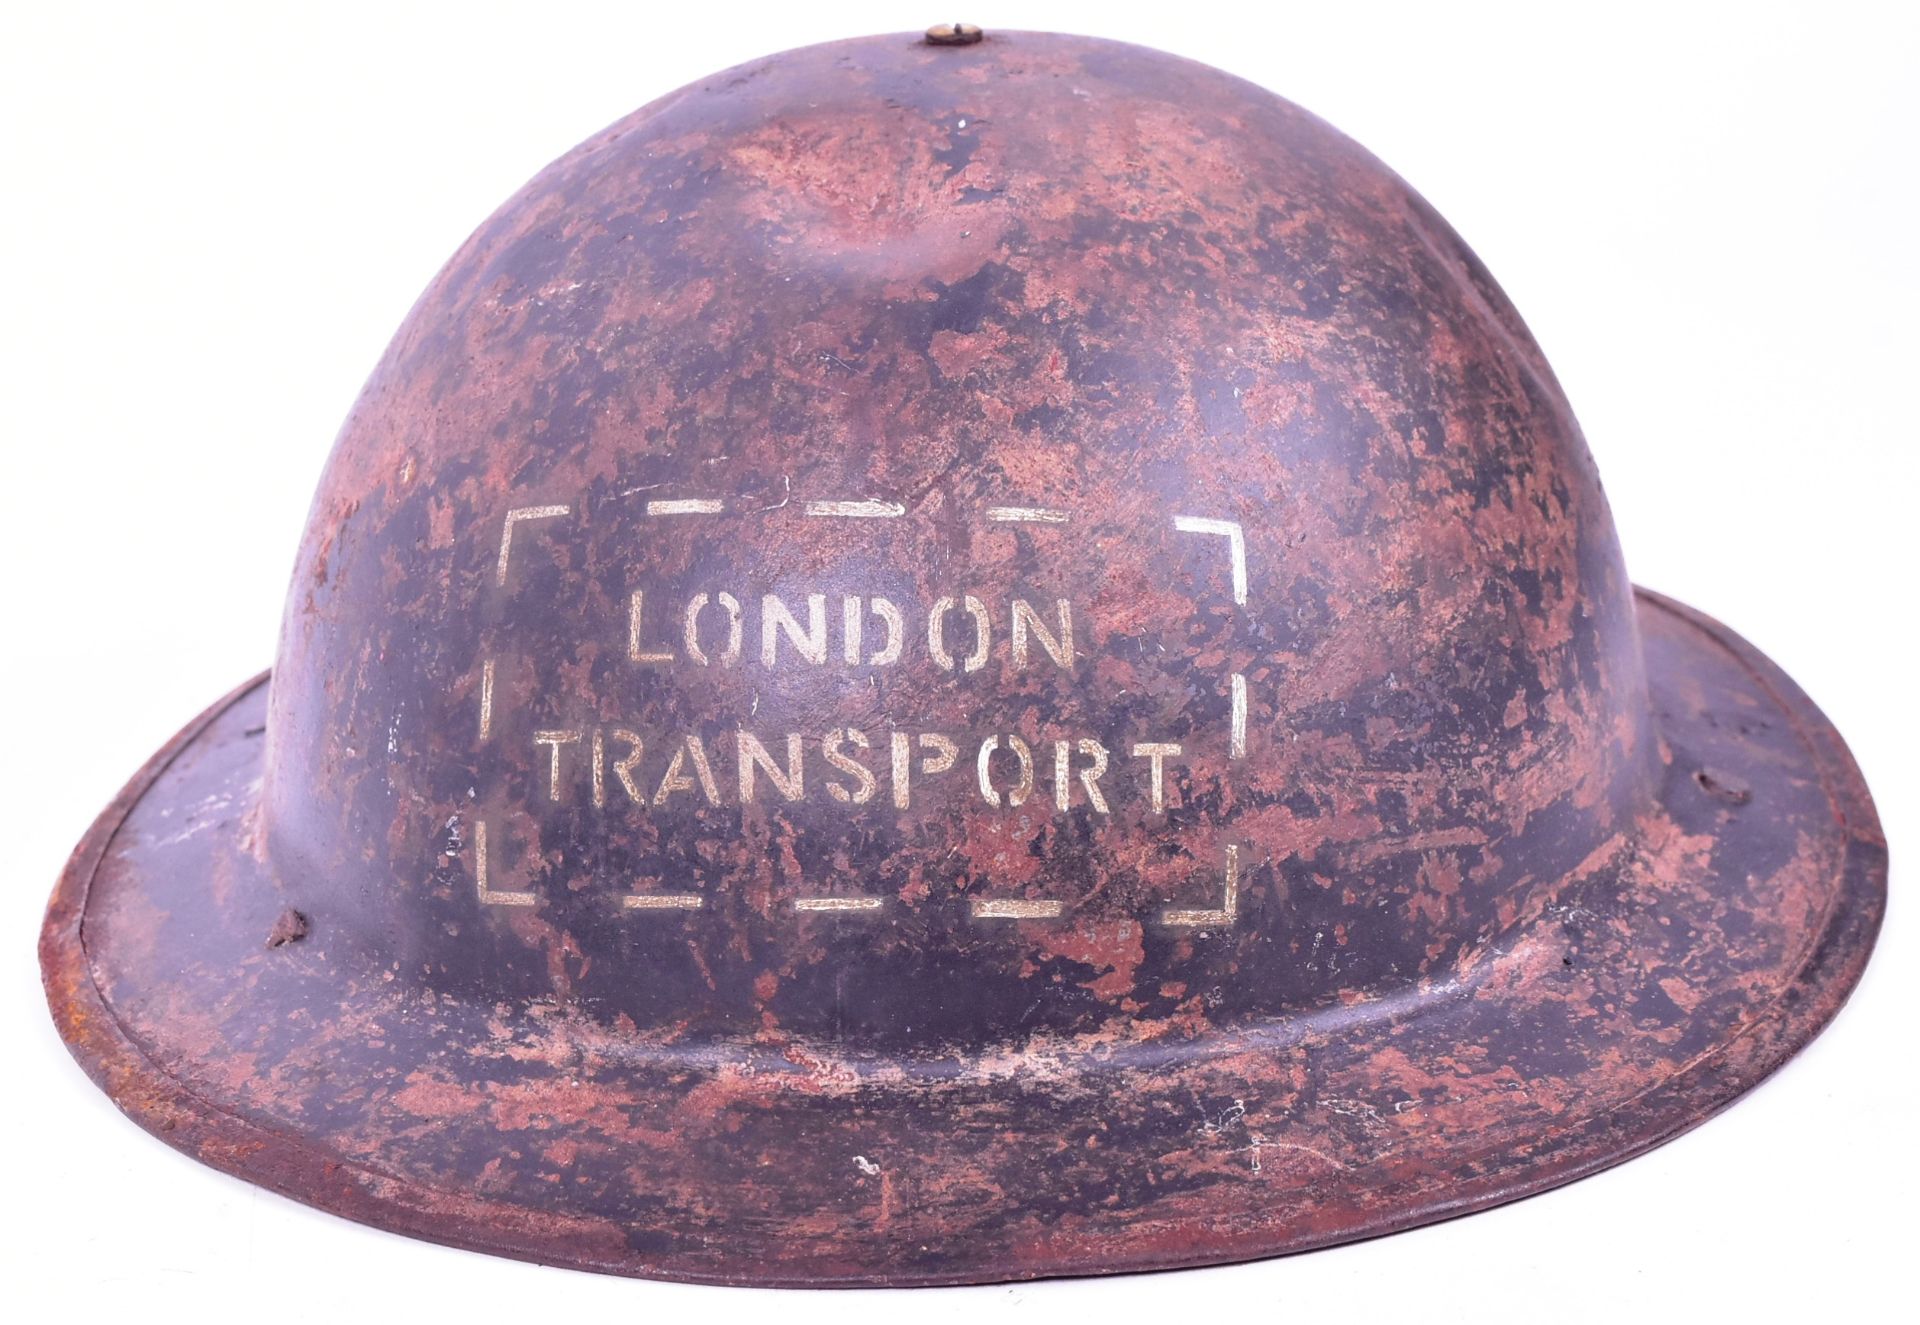 WWII SECOND WORLD WAR BRITISH BRODIE HELMET - LONDON TRANSPORT - Image 2 of 5